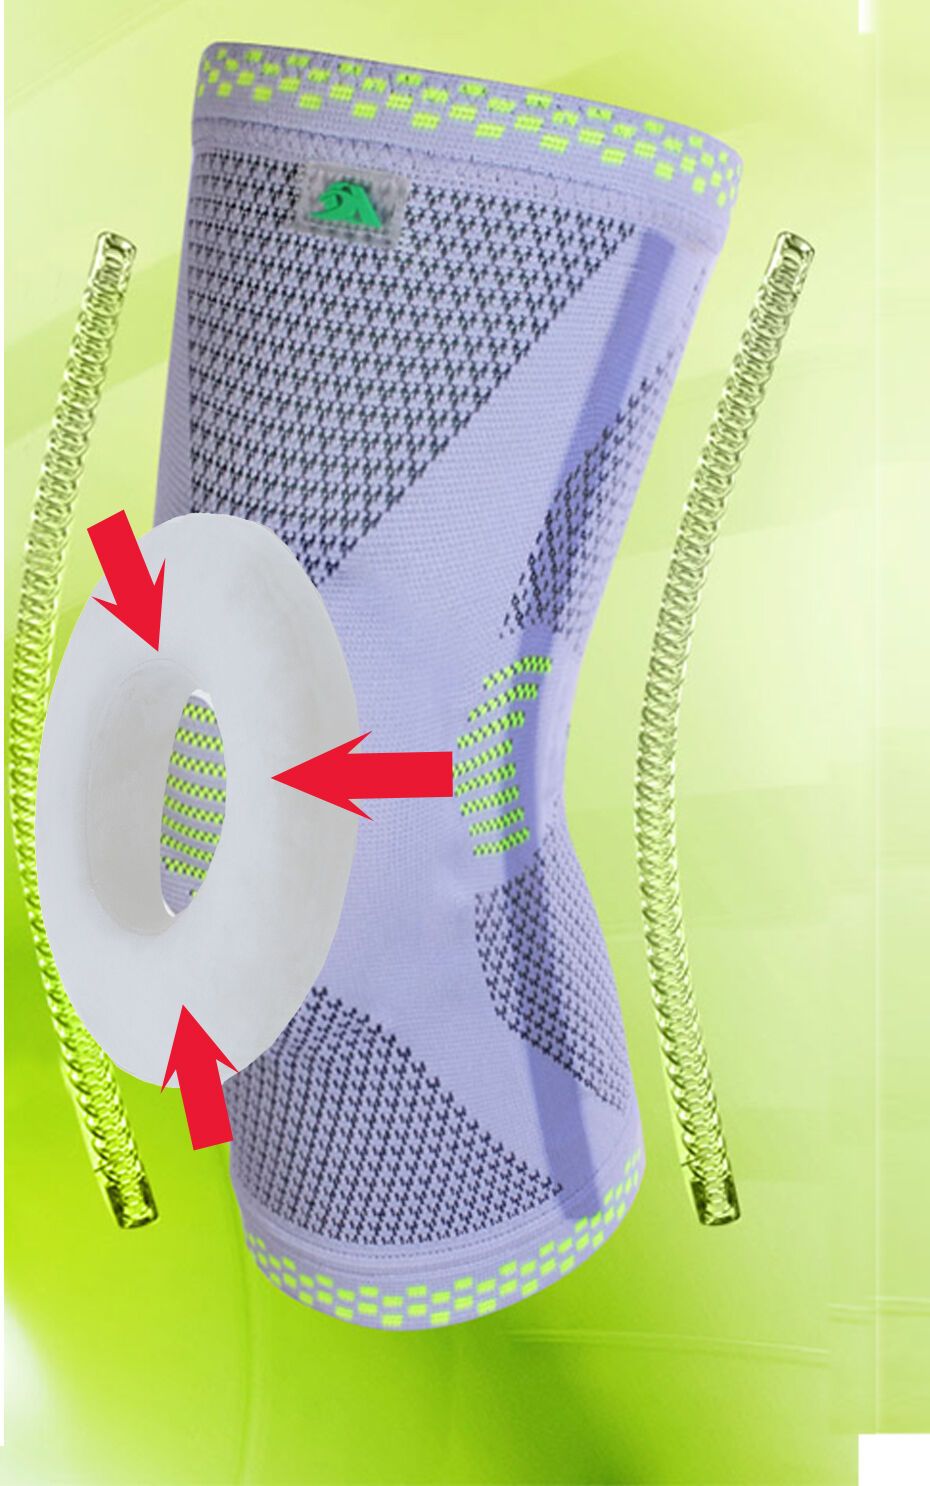 Vital Comfort Kniebandage PatellaTec für Sport u. Regeneration, perfekter halt durch Silikonstreifen